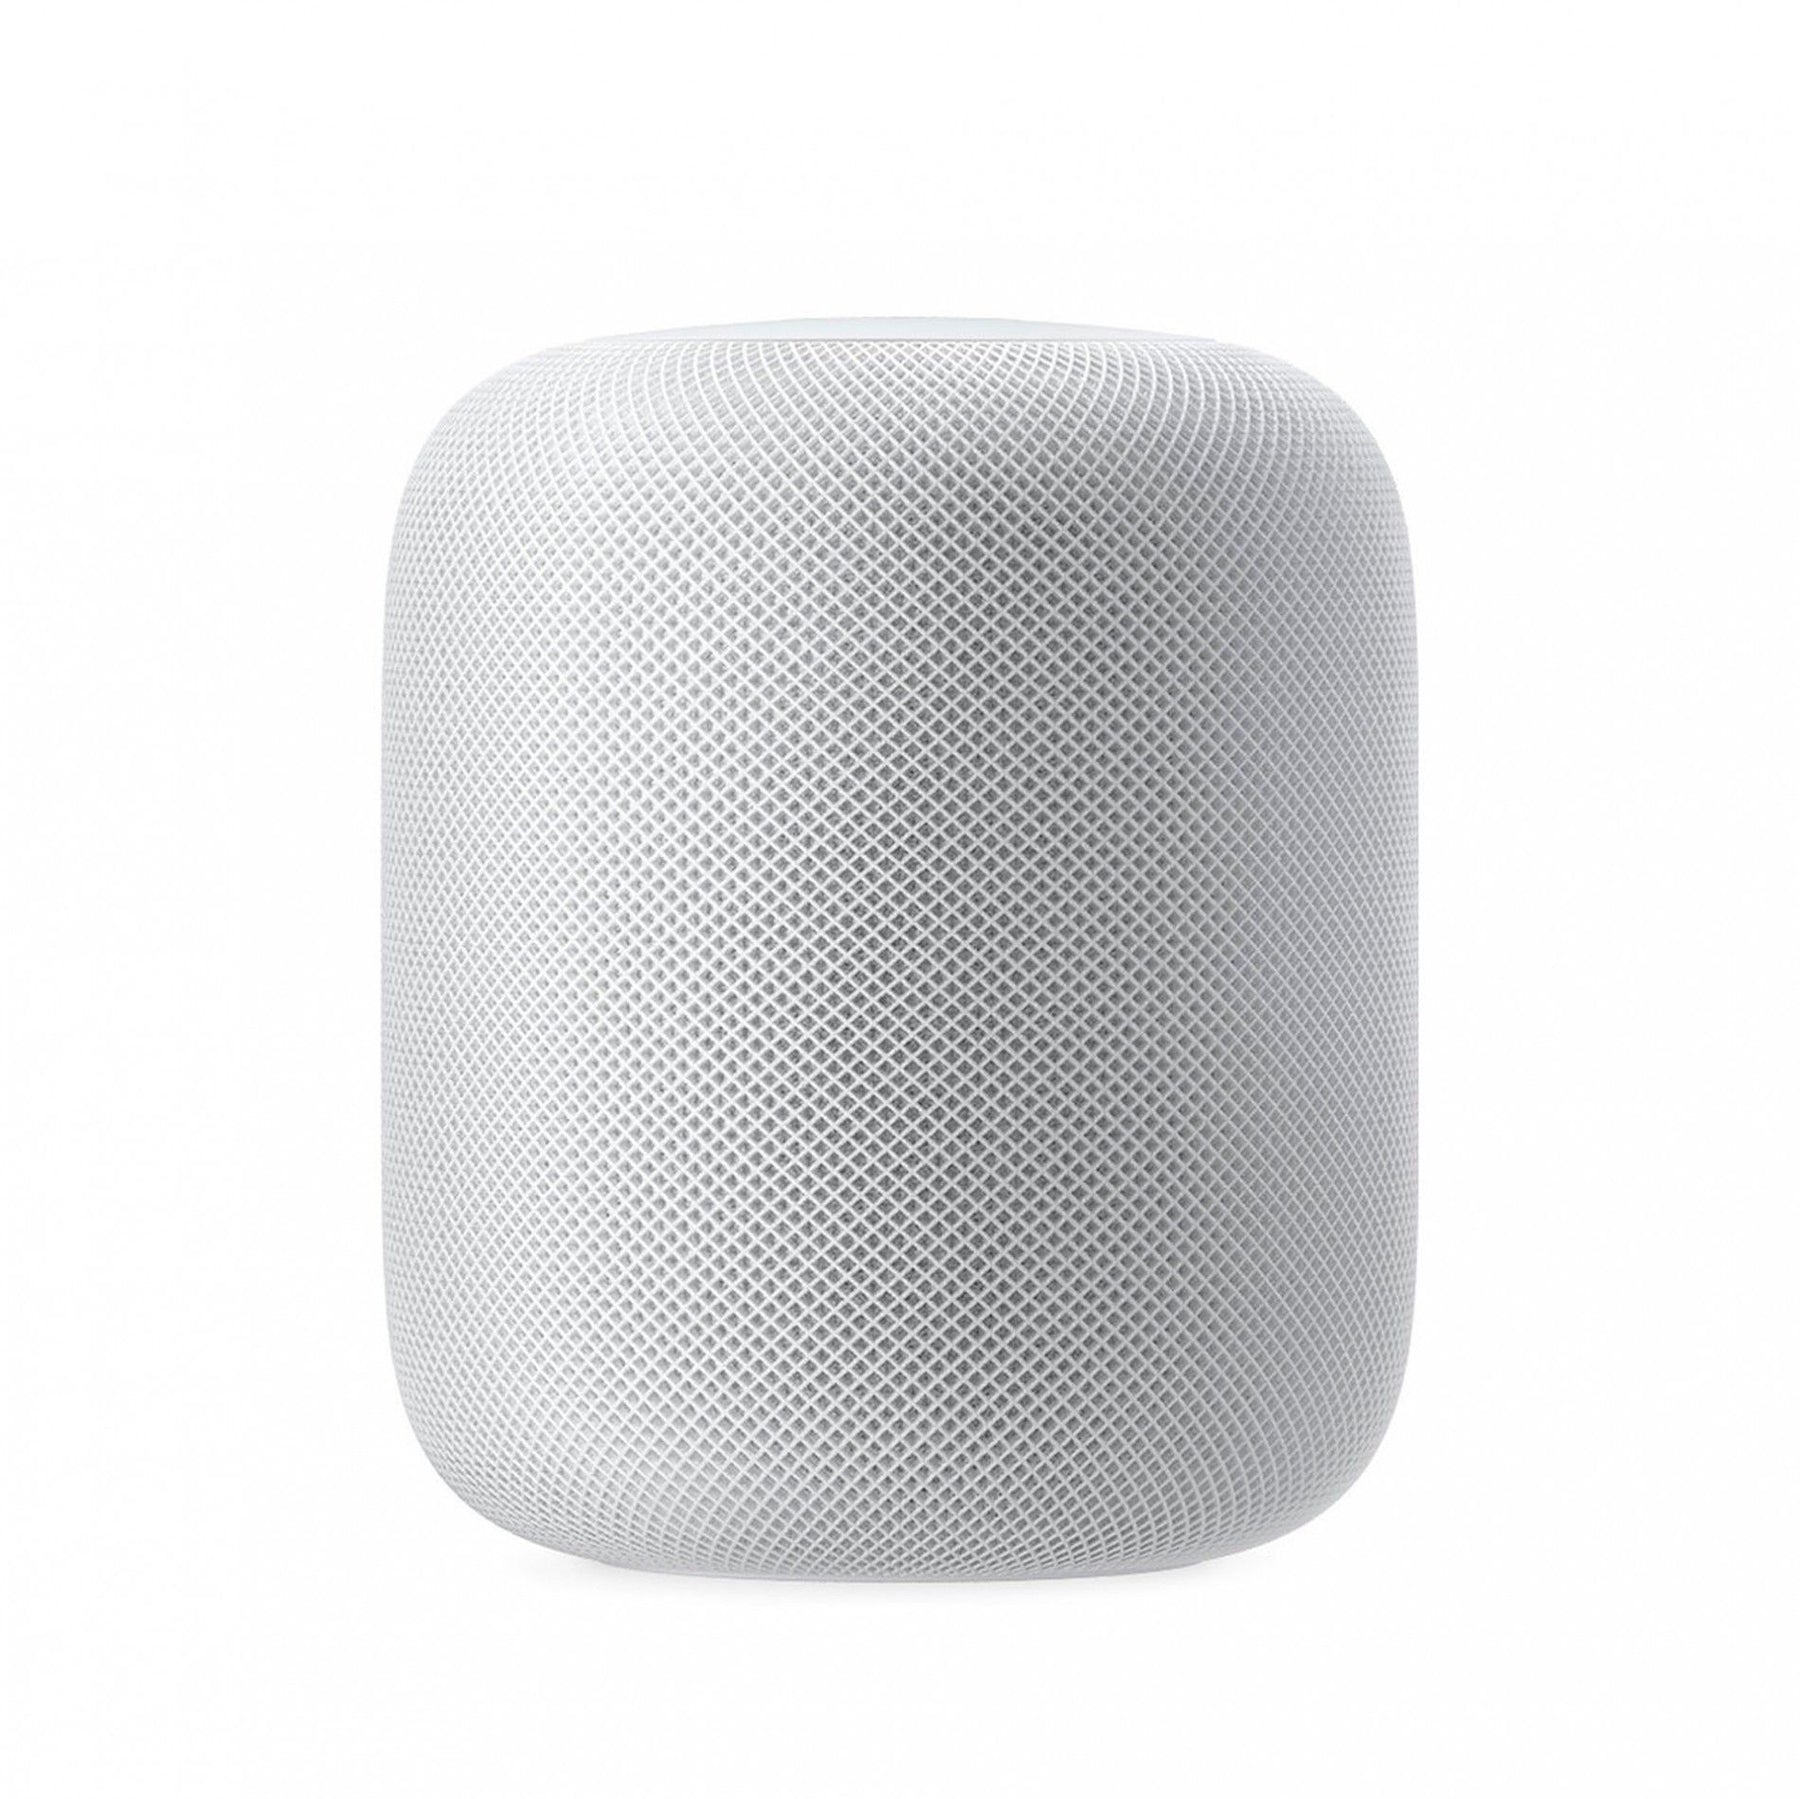 Apple HomePod Branco